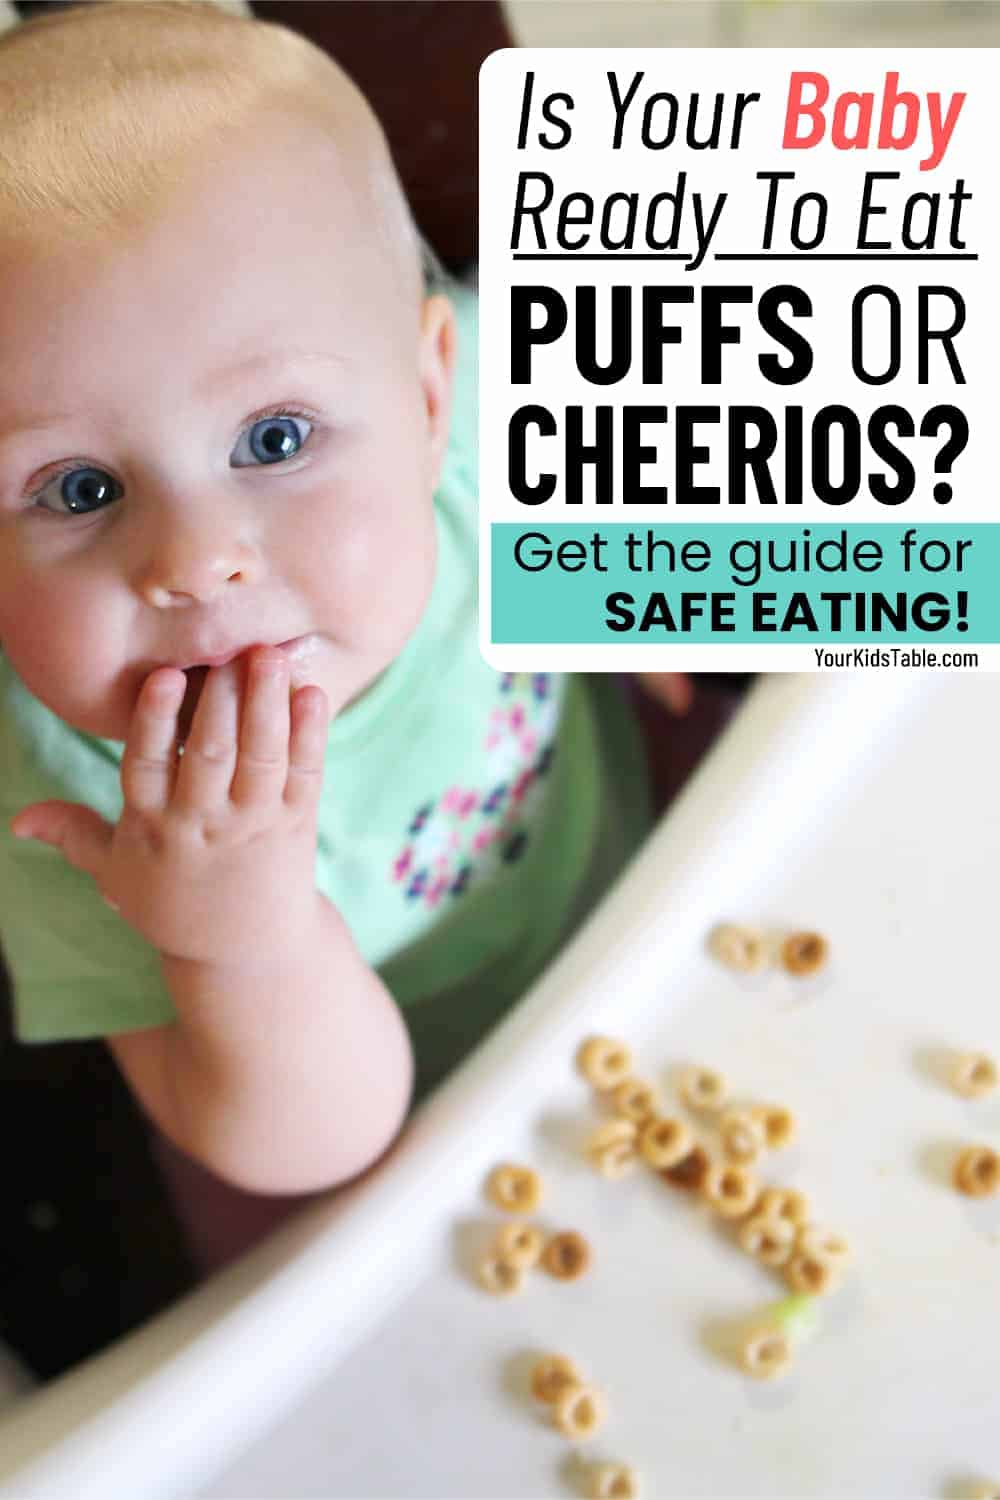 https://yourkidstable.com/wp-content/uploads/2017/12/when-can-babies-eat-cheerios-pinterest-4-1.jpg